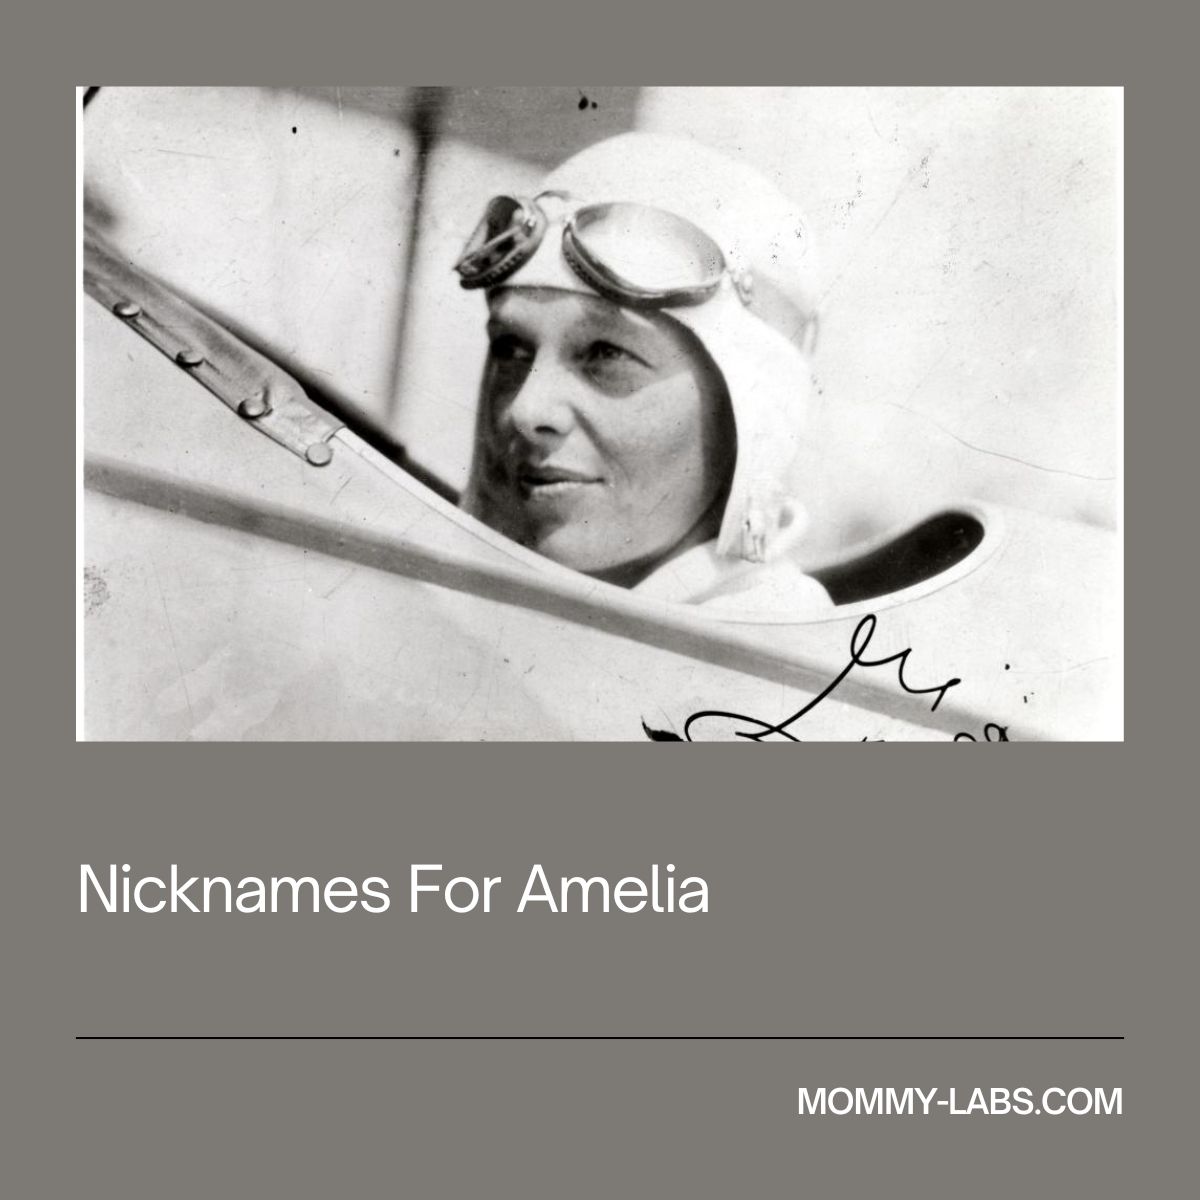 Nicknames For Amelia